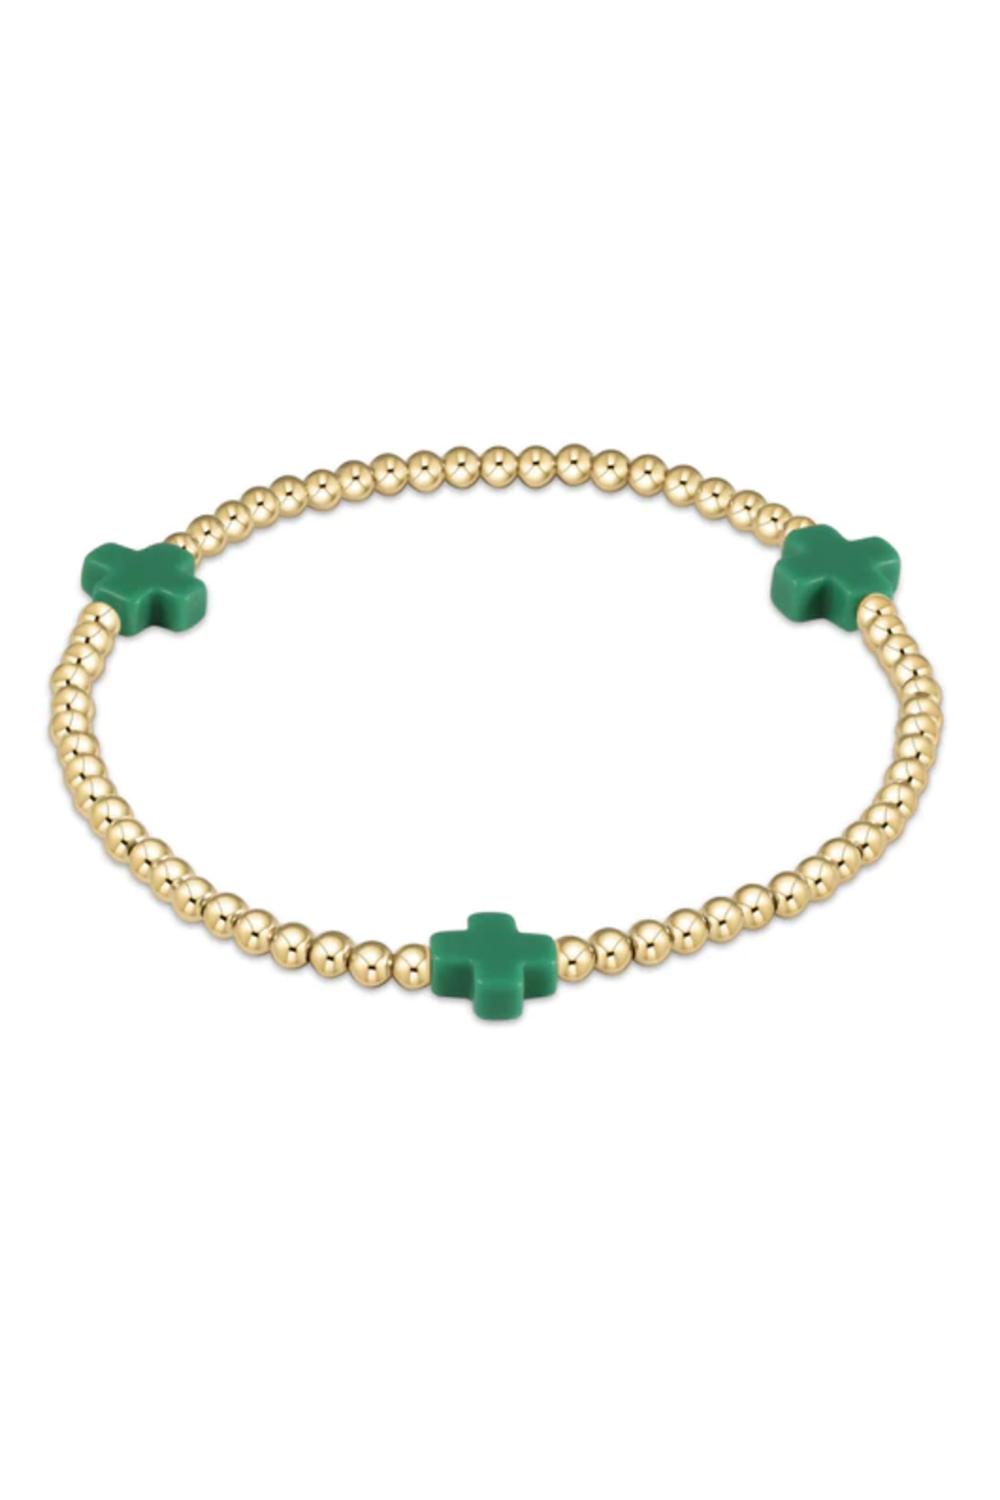 EN Gold Signature Cross Pattern Bracelet 3mm - Emerald